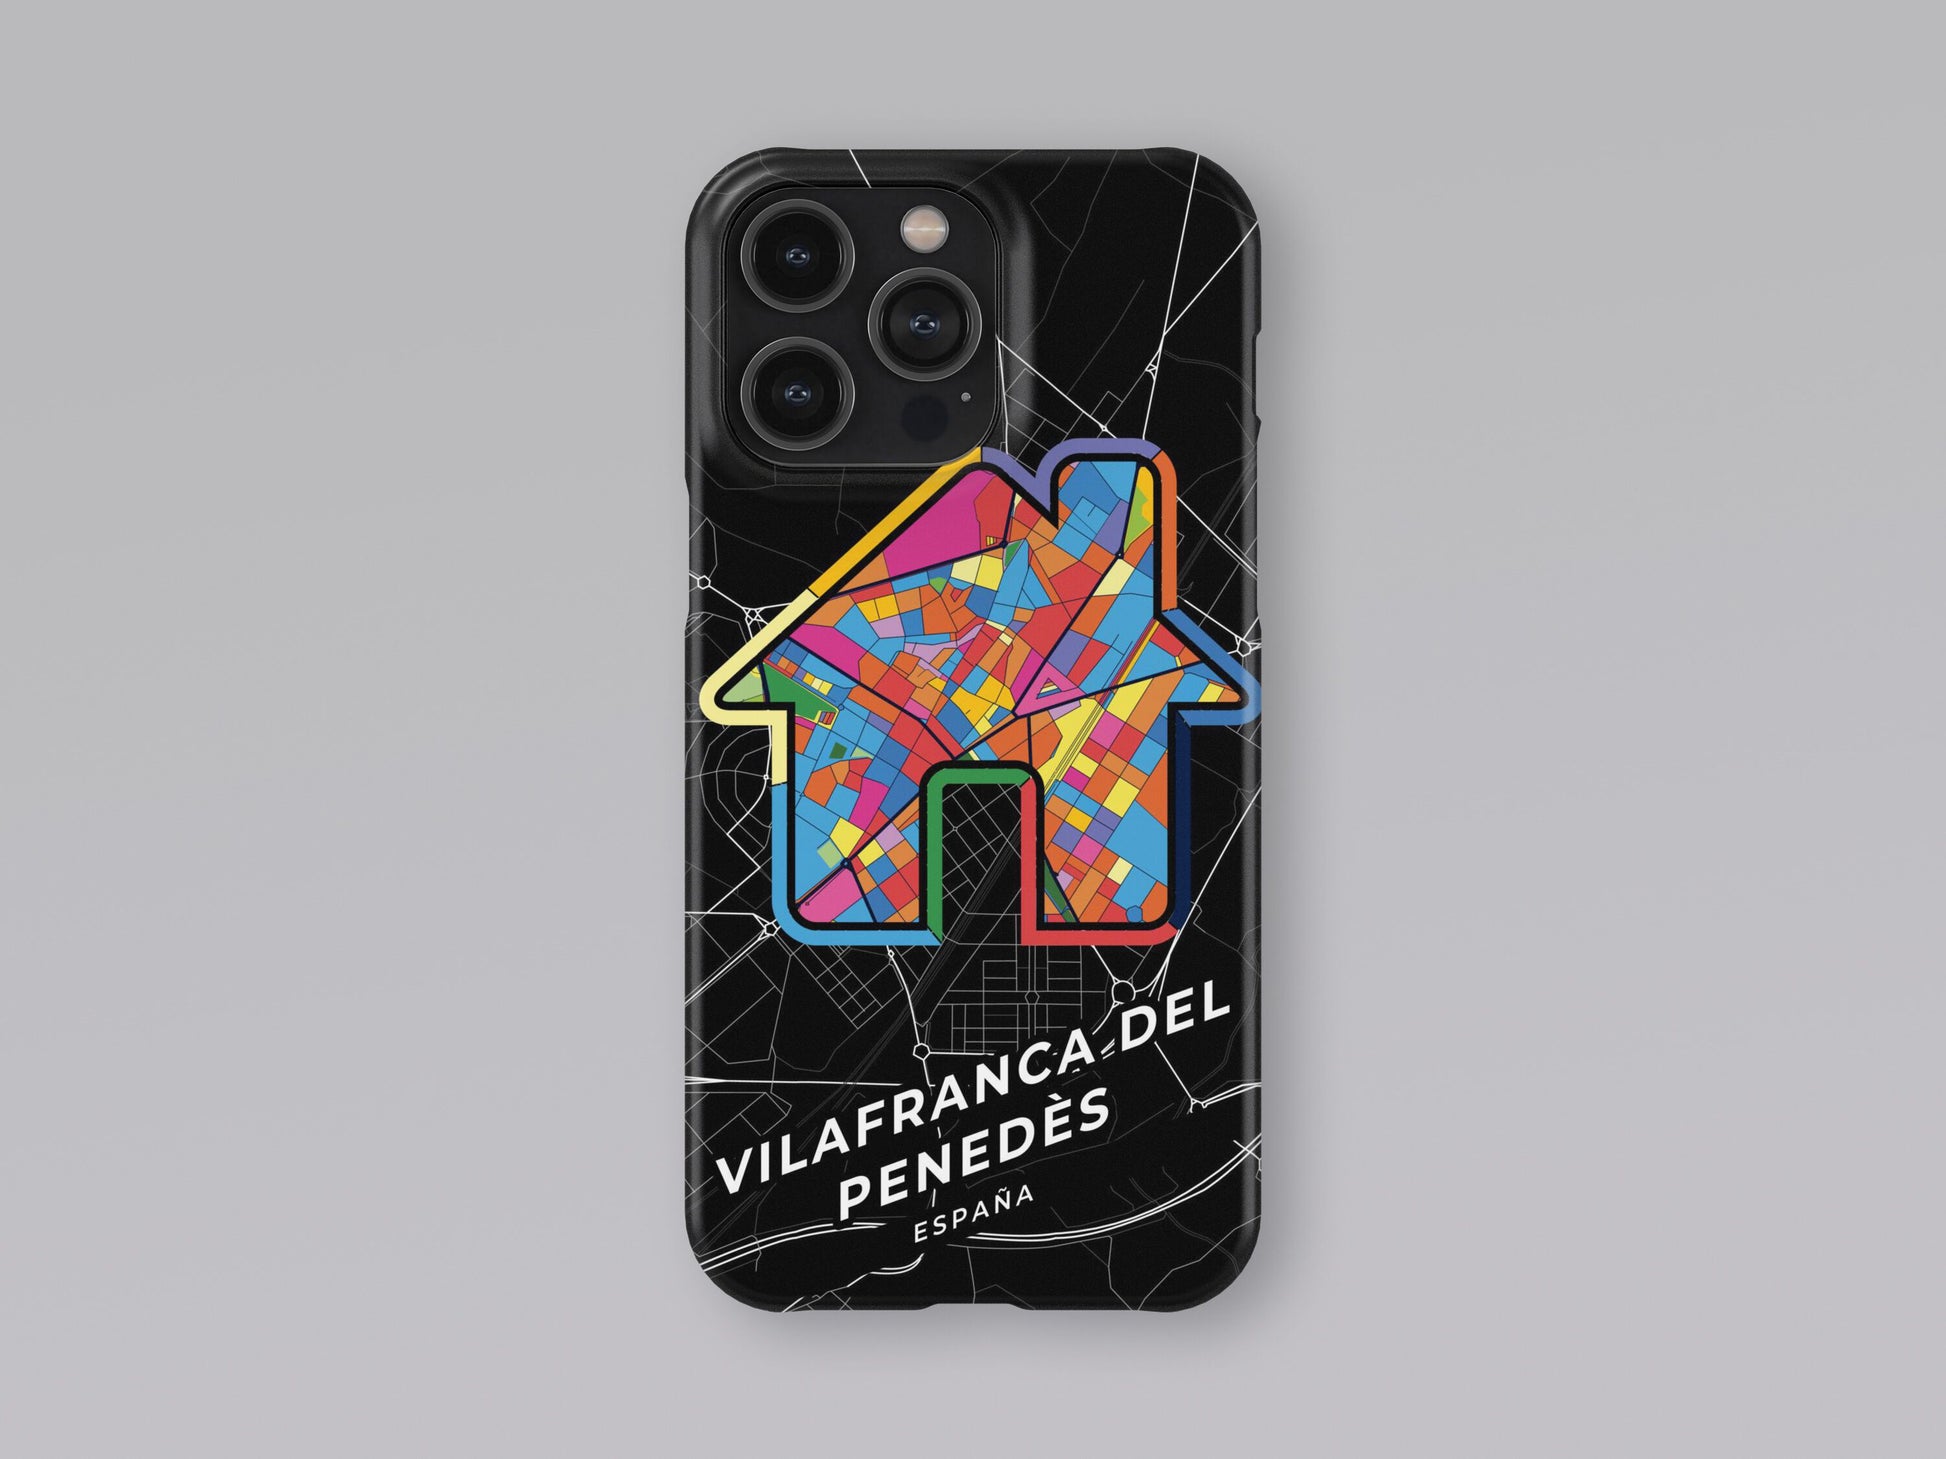 Vilafranca Del Penedès Spain slim phone case with colorful icon 3